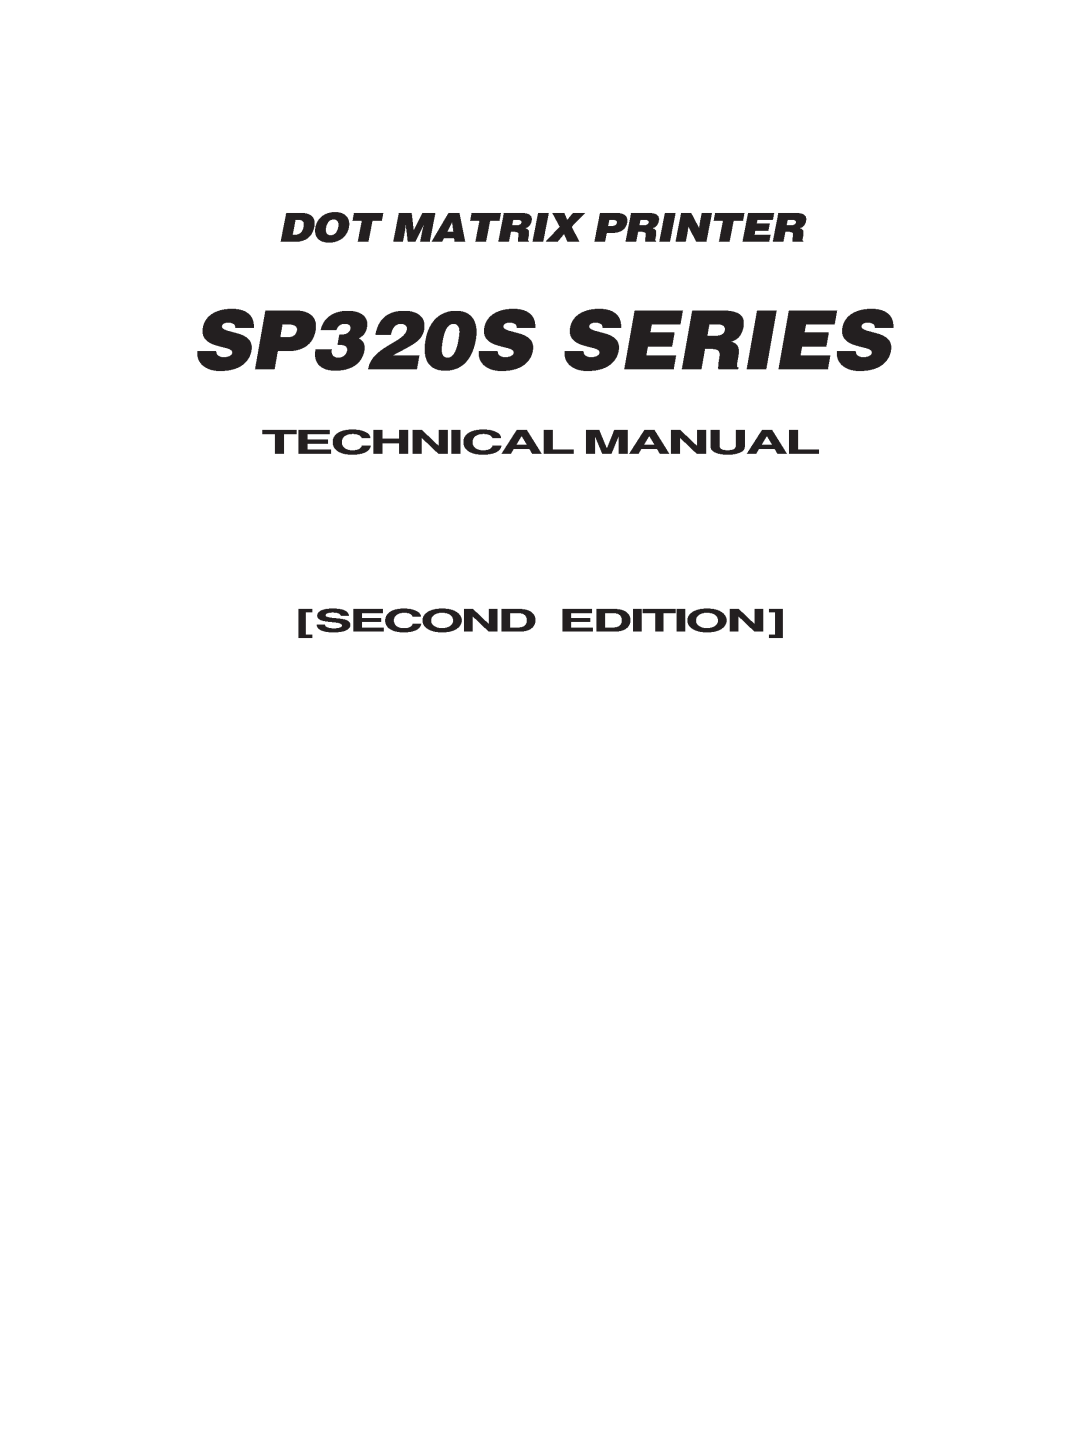 Star Micronics technical manual SP320S SERIES, Dot Matrix Printer, Technicalmanual, Second Edition 